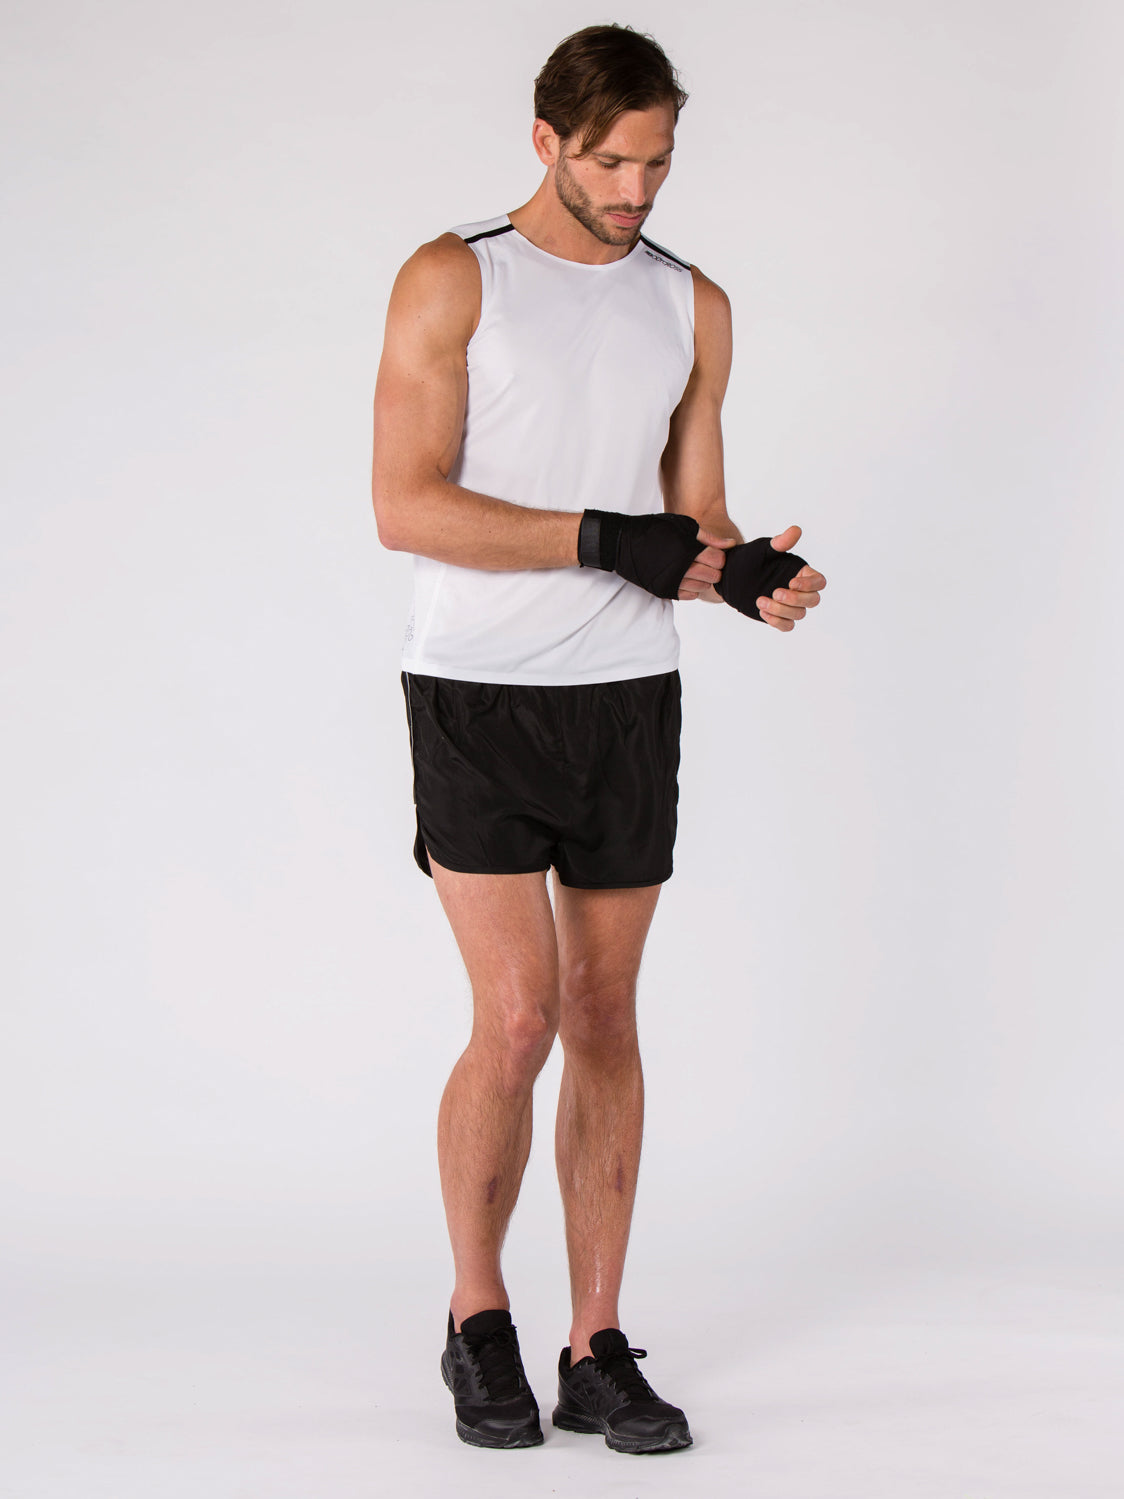 Débardeur de running homme Orwen – Bodycross